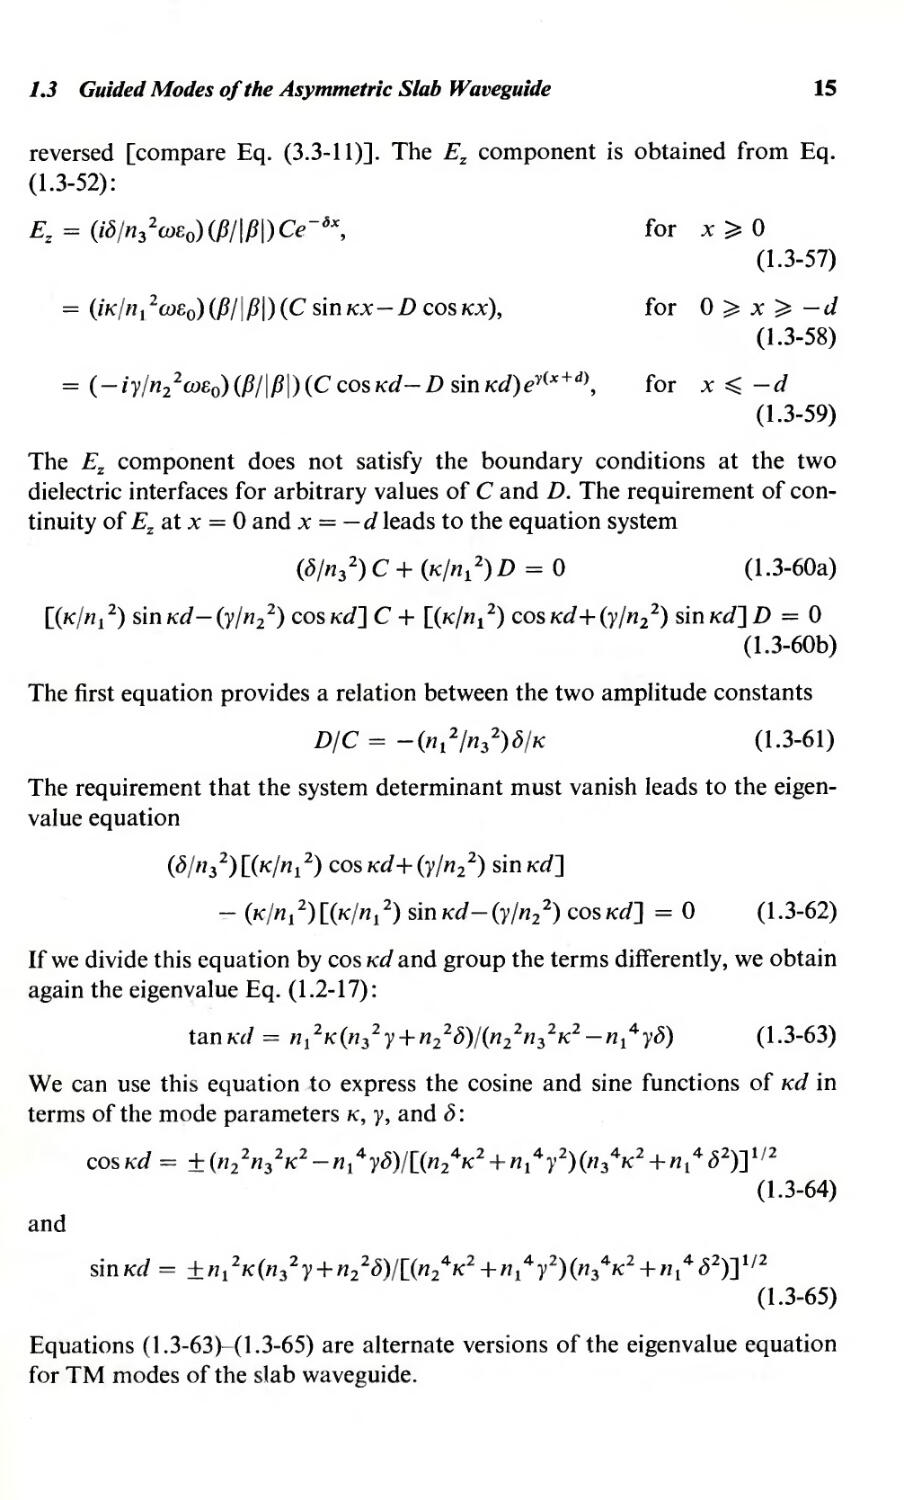 15
--- TM modes, 15
--- eigenvalue equation, 15